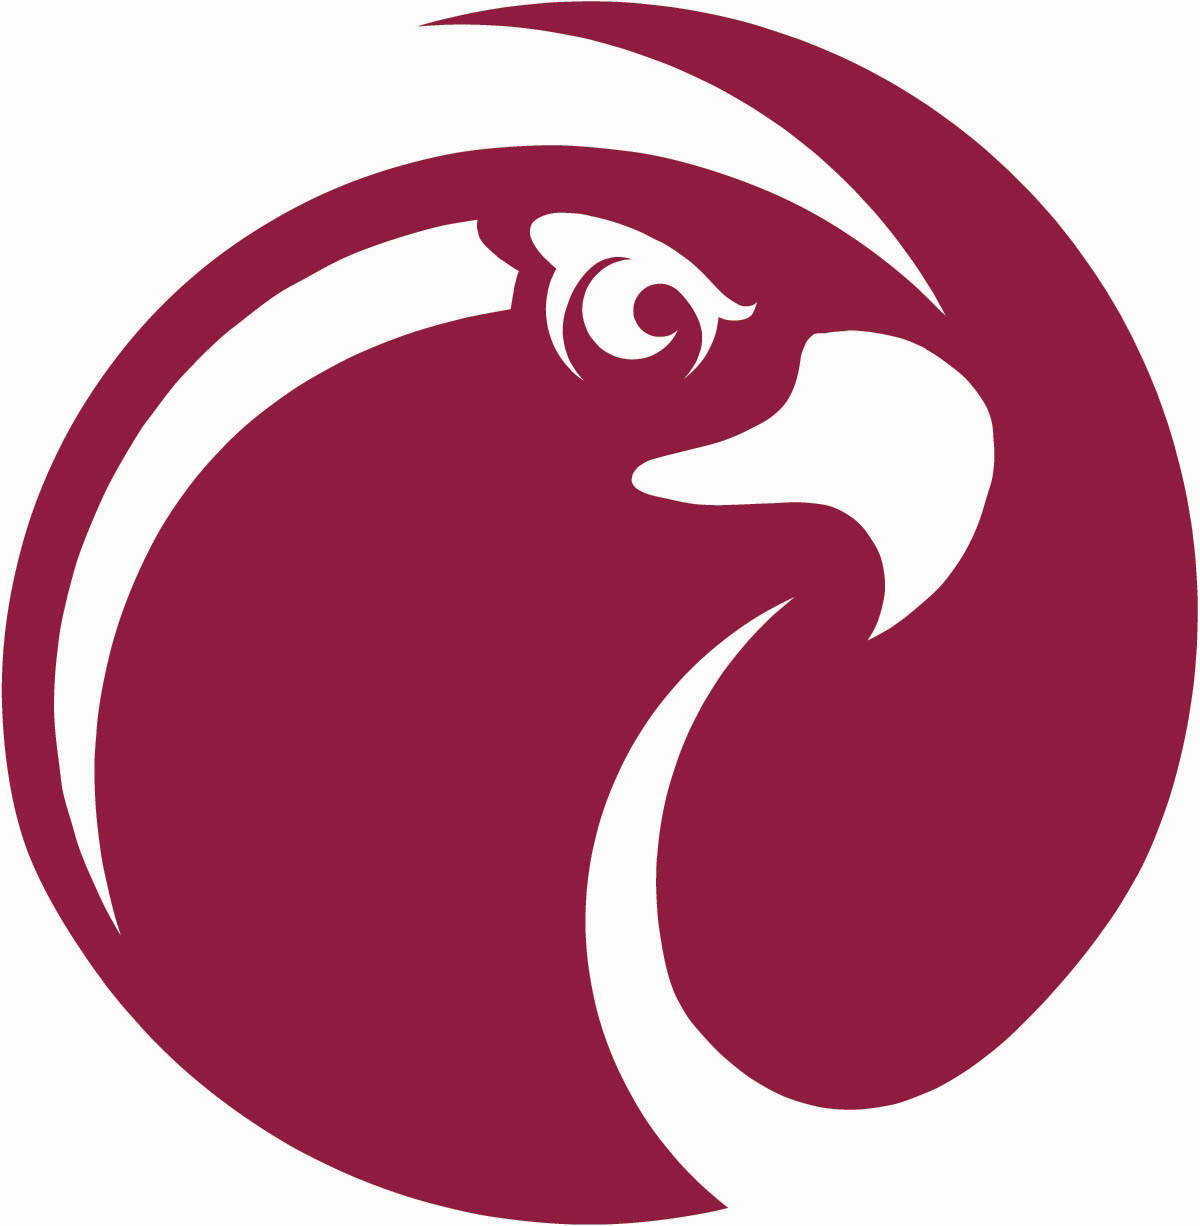 falcon logo images